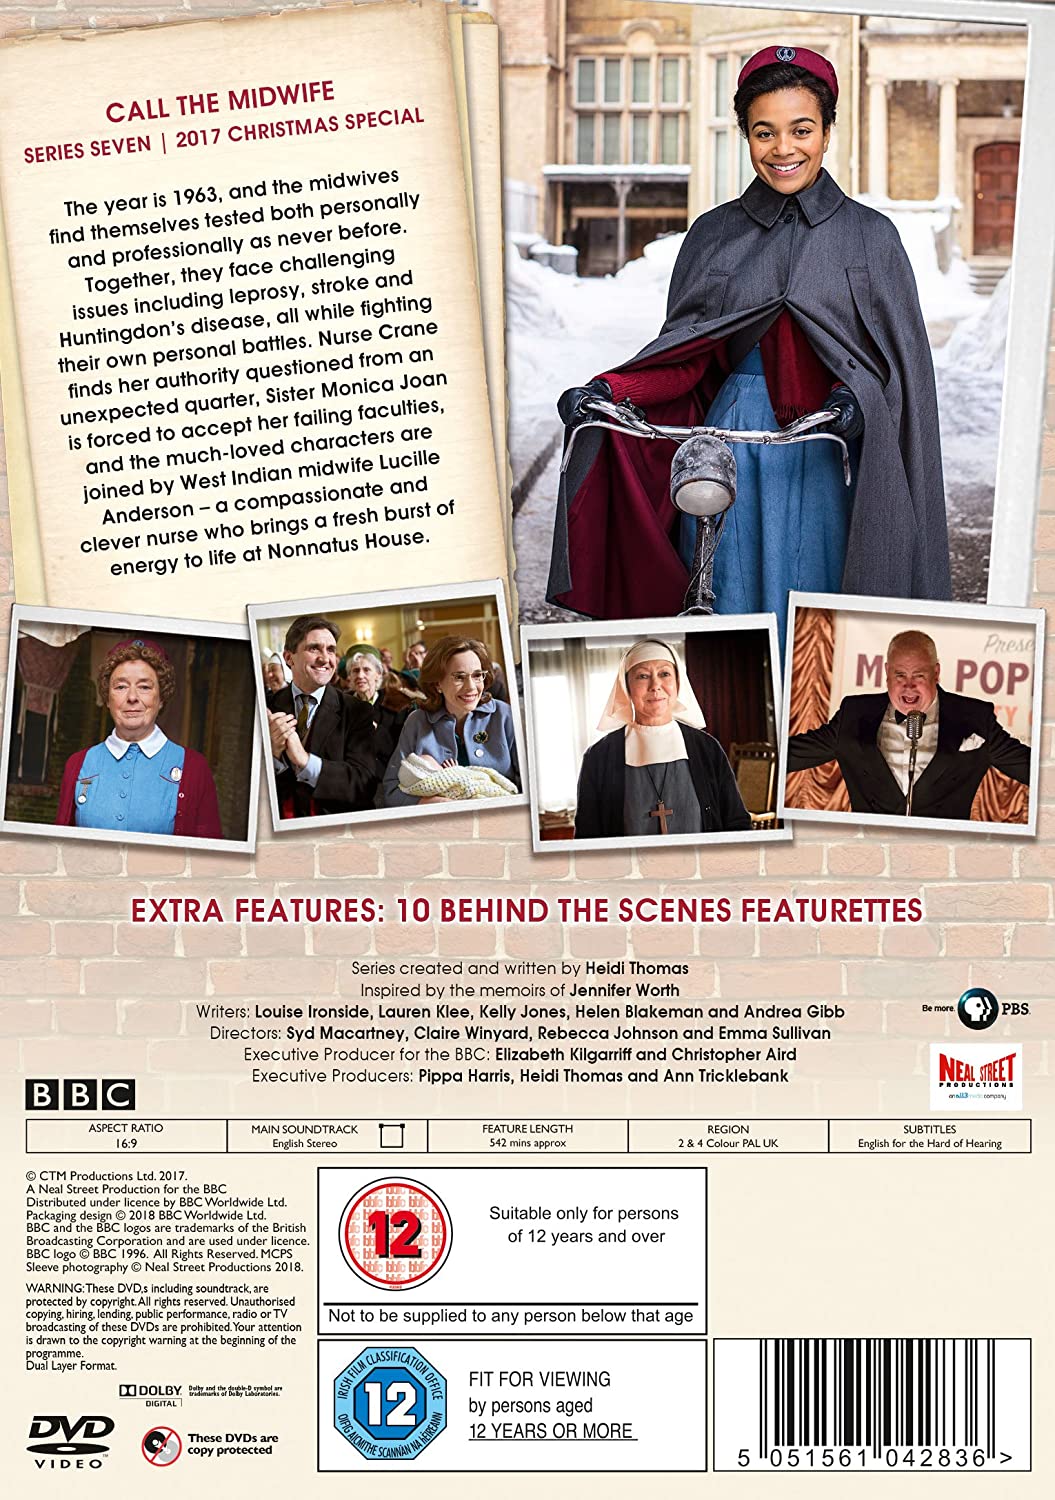 Call The Midwife - Series 7  -Drama [DVD]